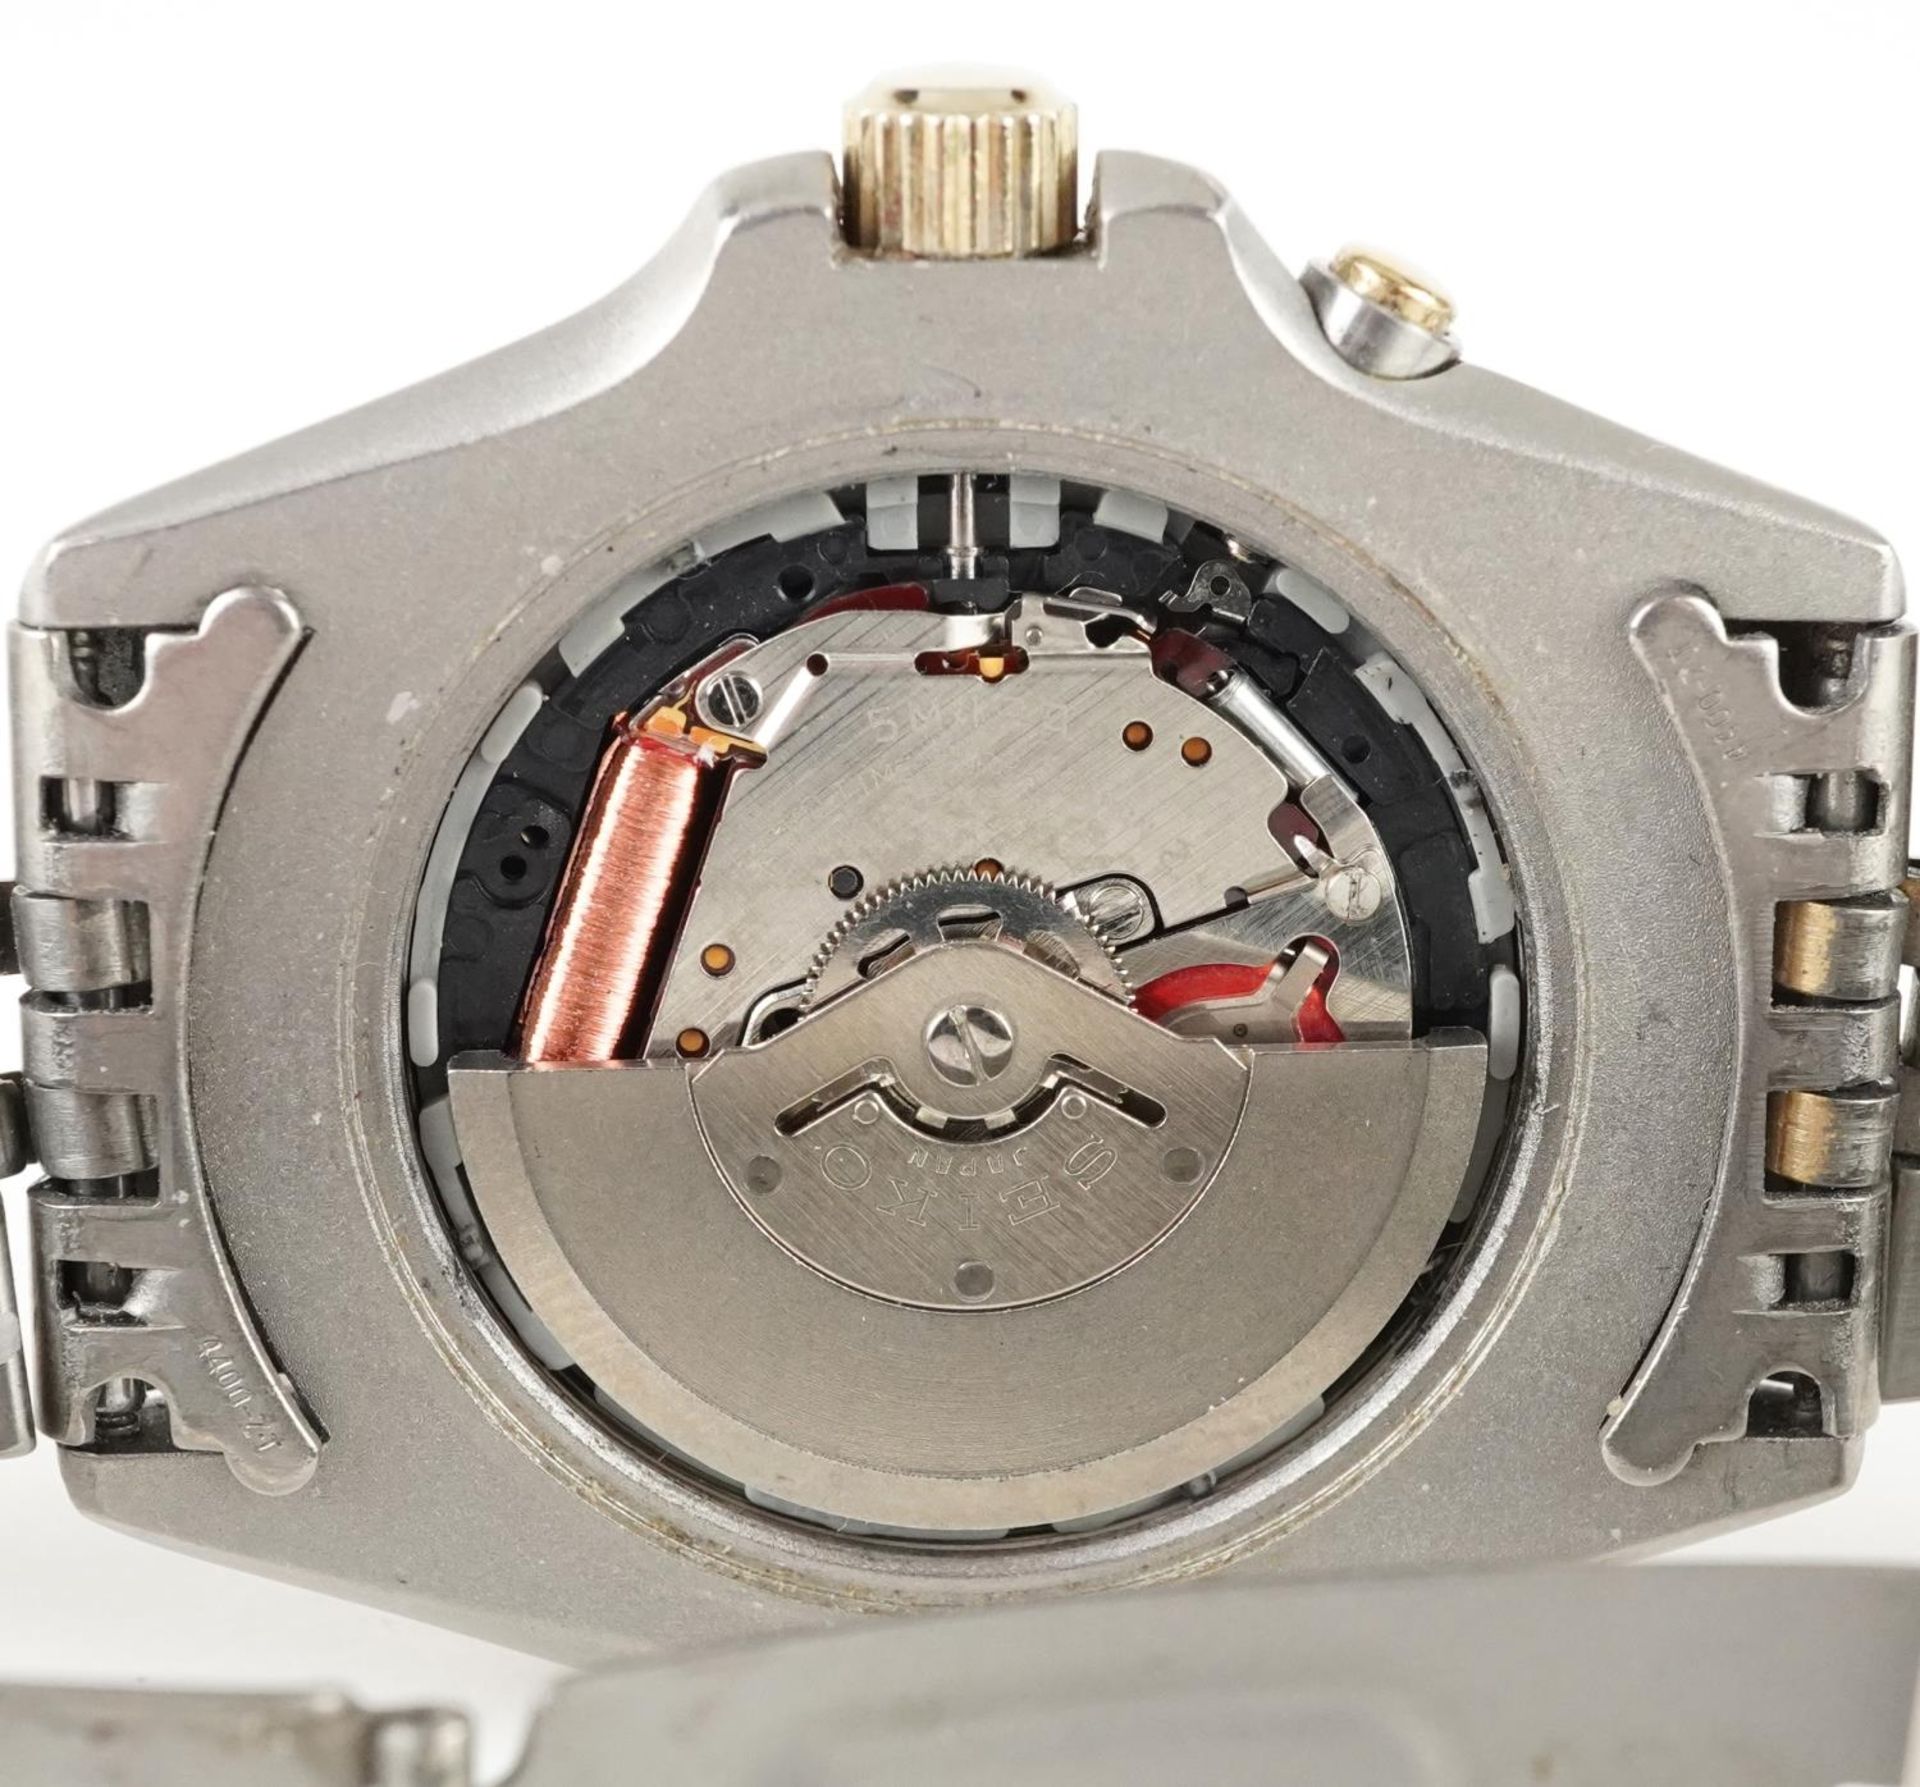 Seiko, gentlemen's Seiko Titanium Sports 200 kinetic wristwatch having day/date aperture and - Bild 5 aus 8